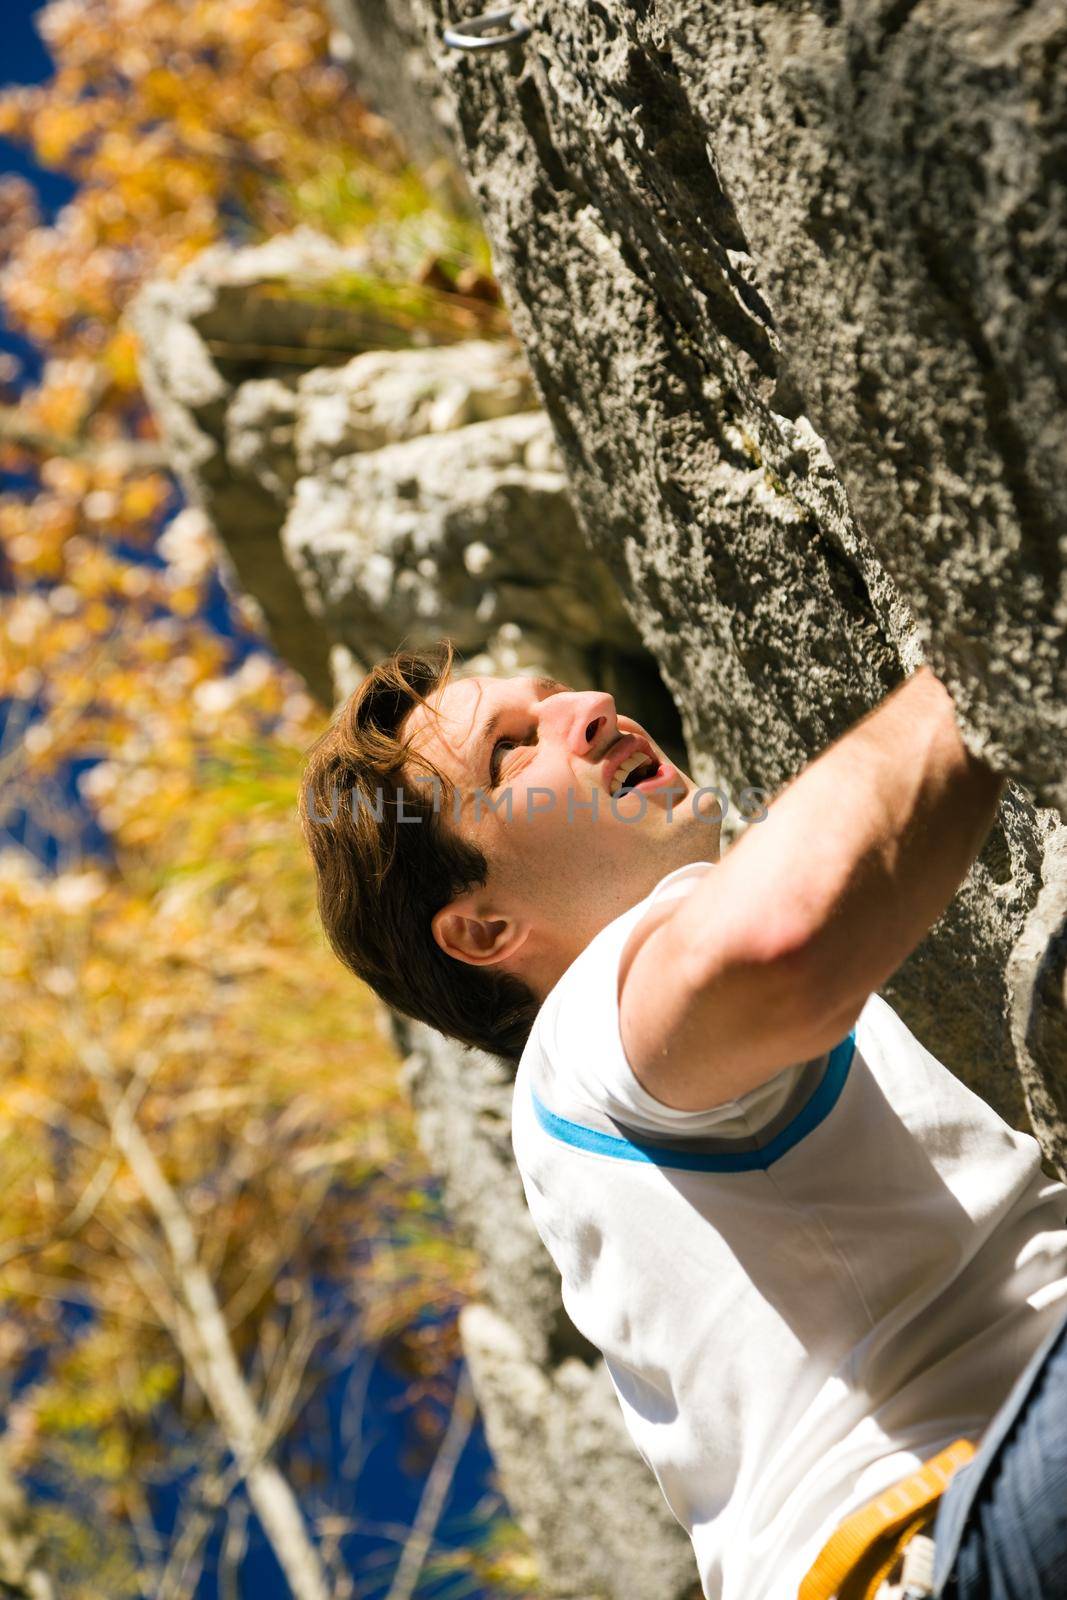 Man climbing a rock short before reaching the summit